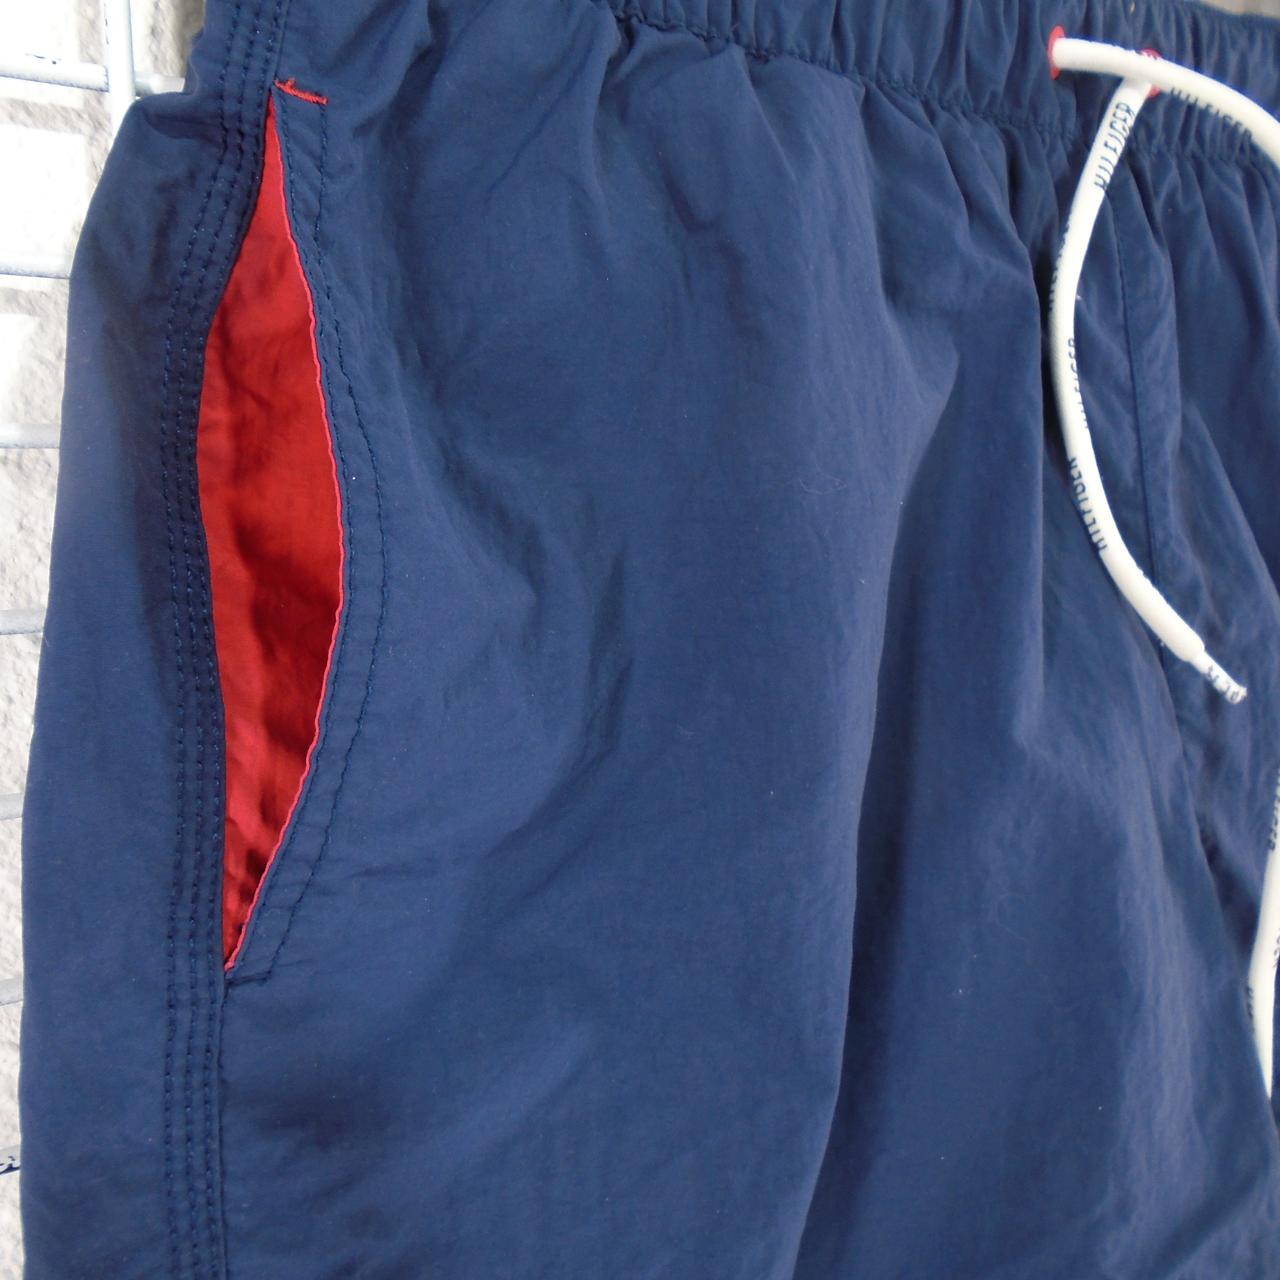 Pantalones cortos de hombre Tommy Hilfiger. Azul oscuro. L. Usado. Bien